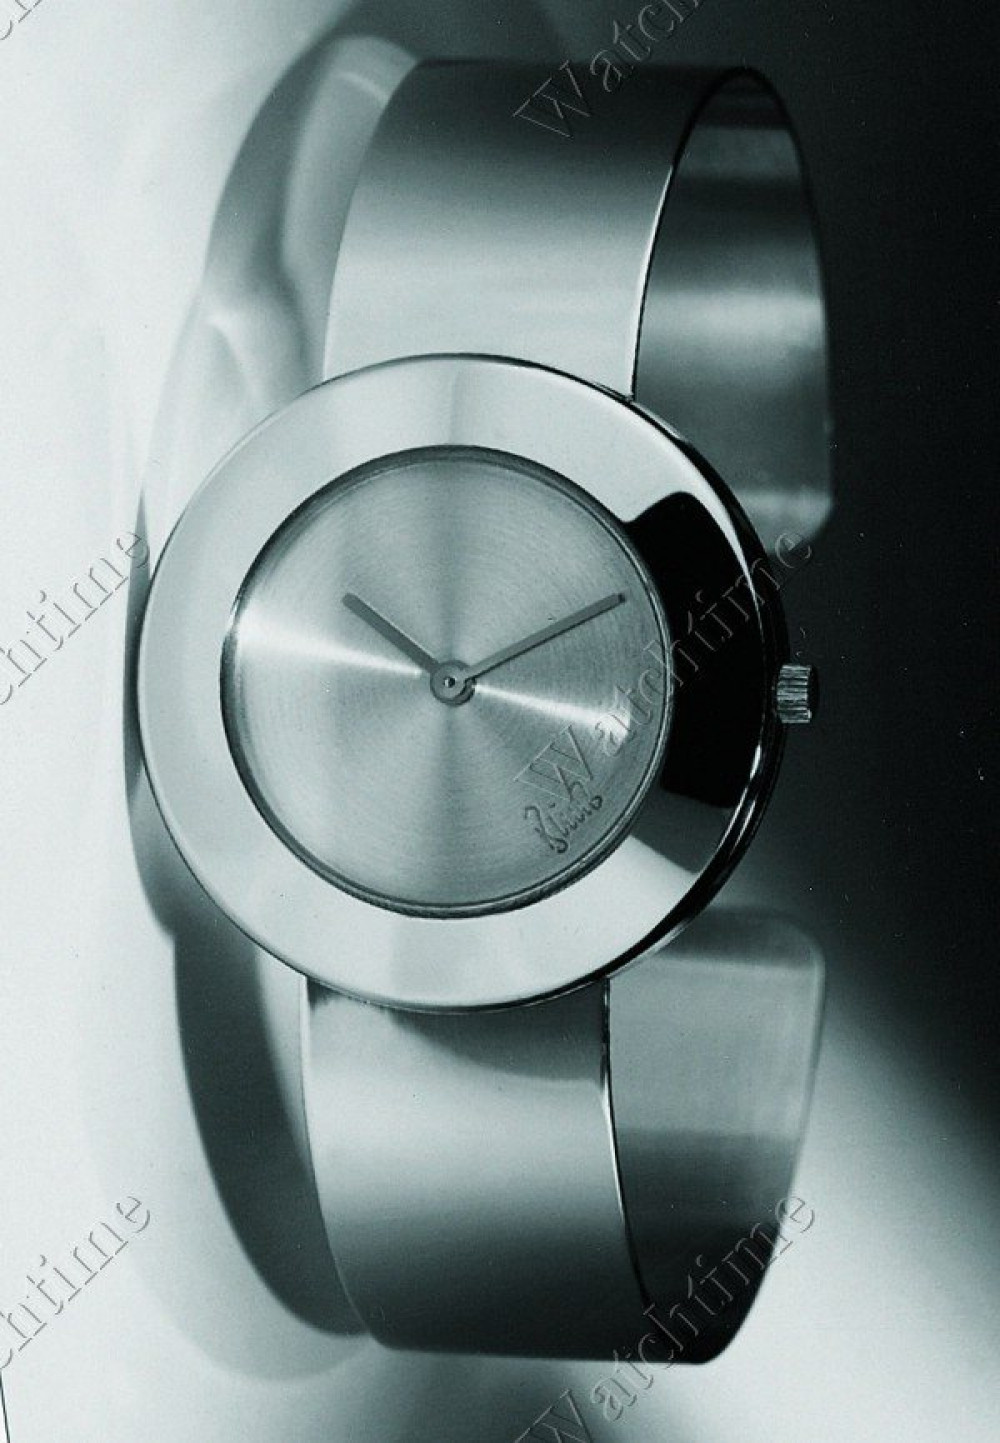 Zegarek firmy Bunz, model Design Time